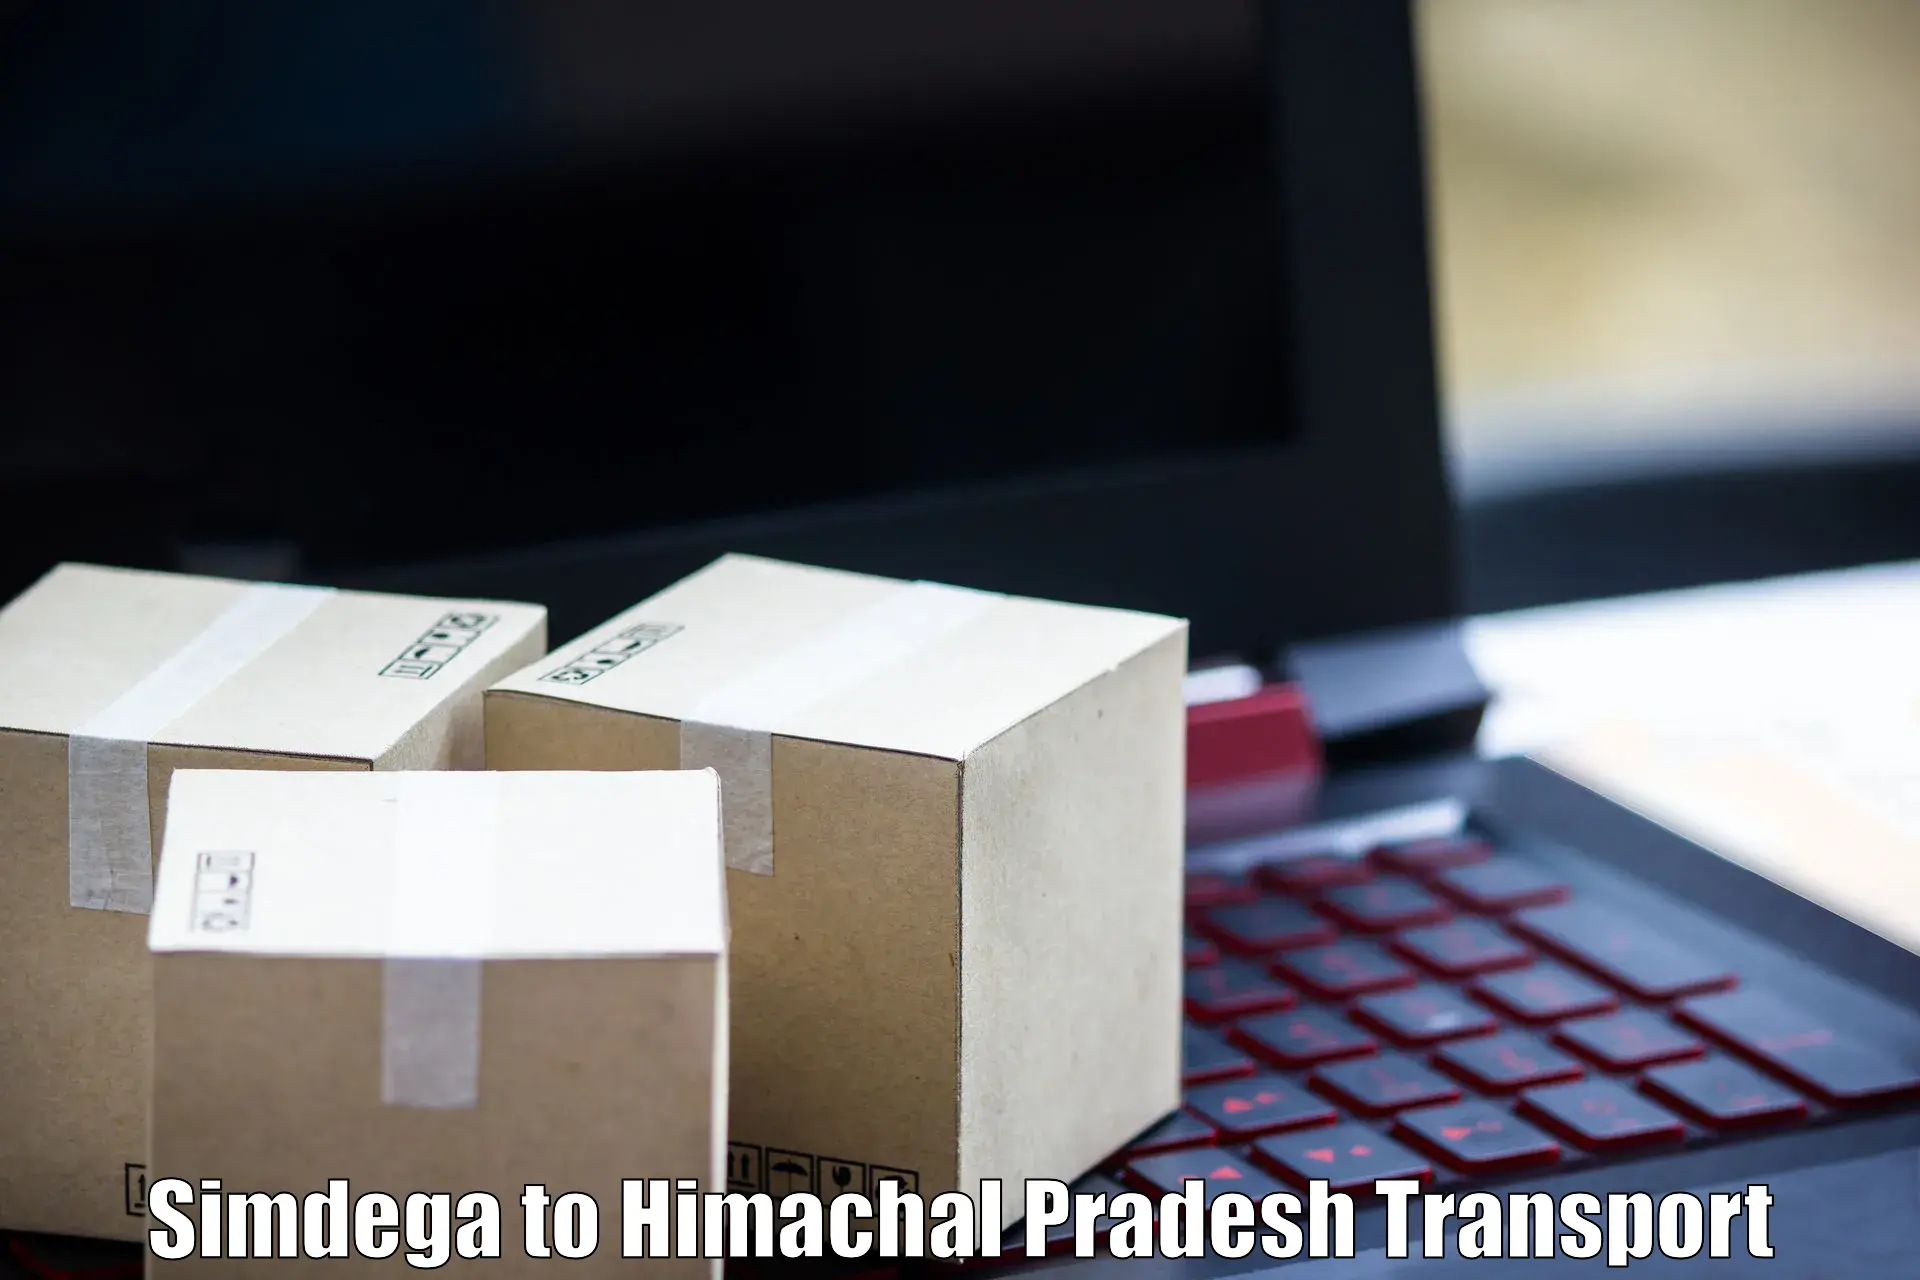 Truck transport companies in India Simdega to Dulchehra